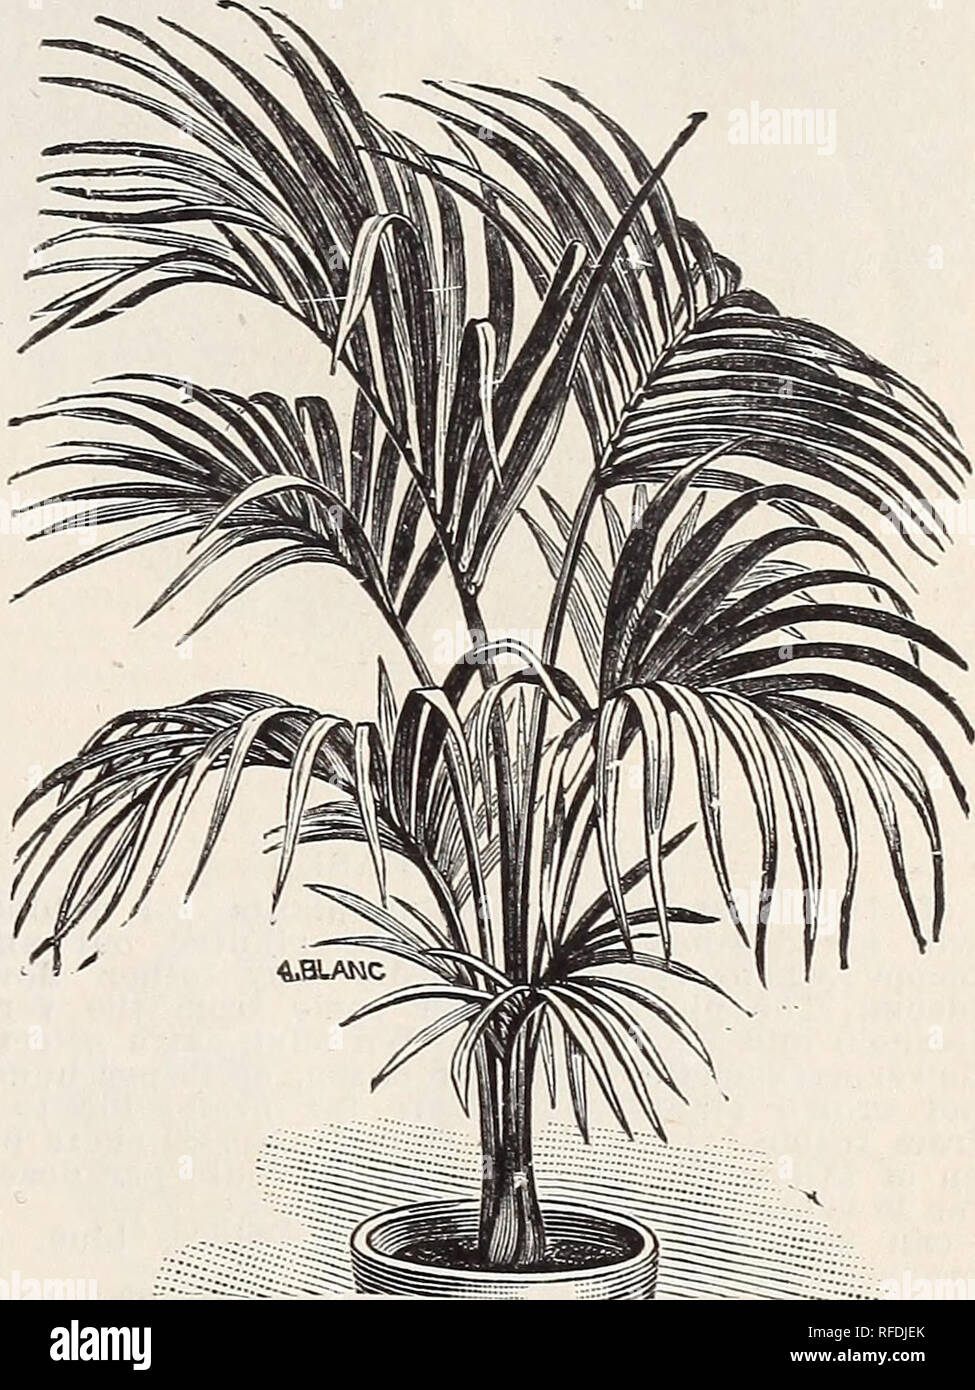 palm tree wallpaper uk